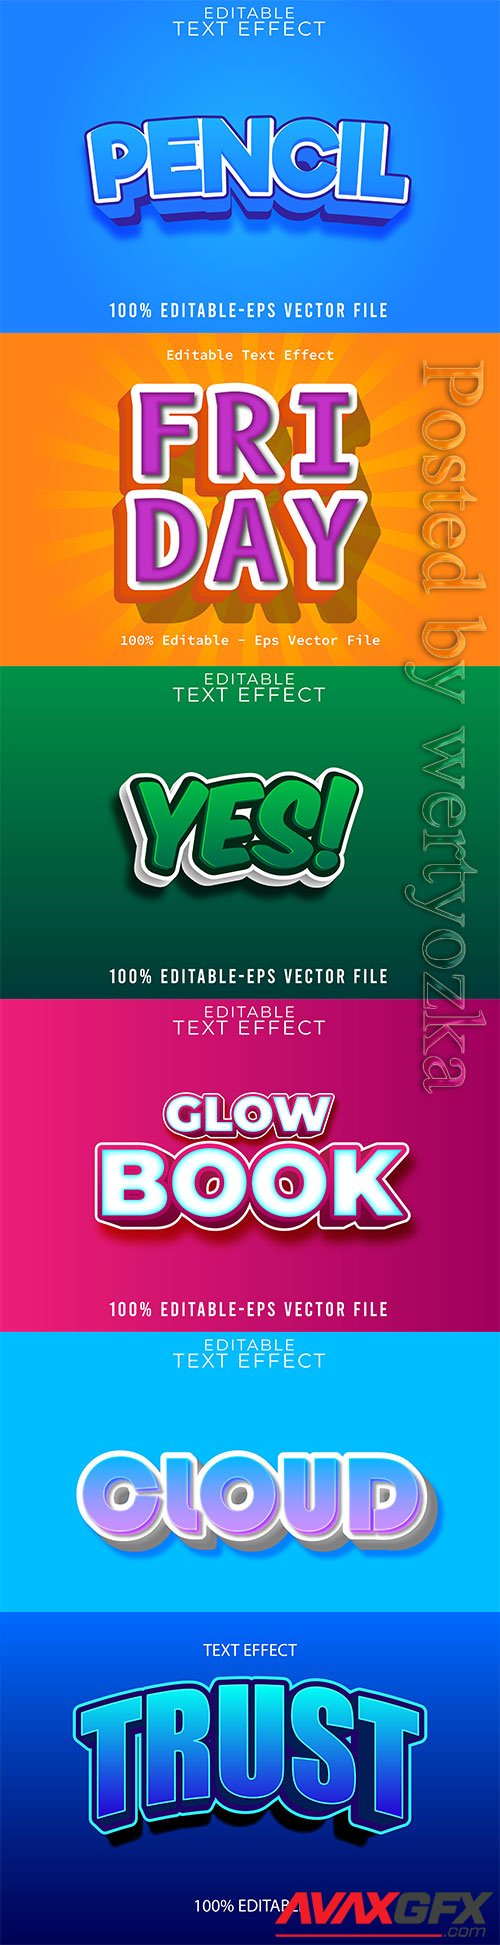 3d editable text style effect vector vol 651